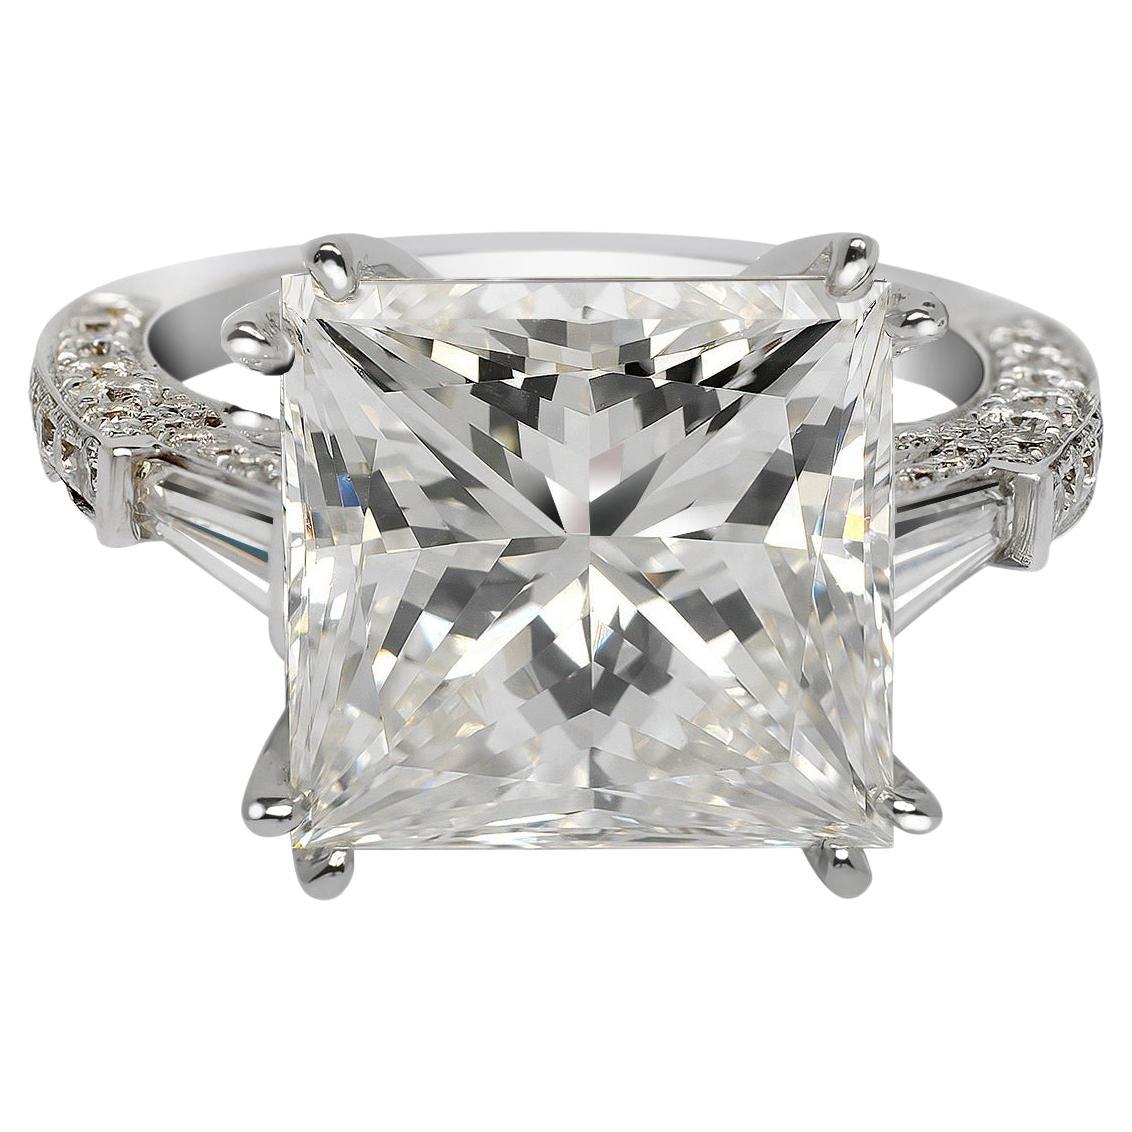 10 Carat Princess Cut Diamond Engagement Ring GIA Certified J VS2